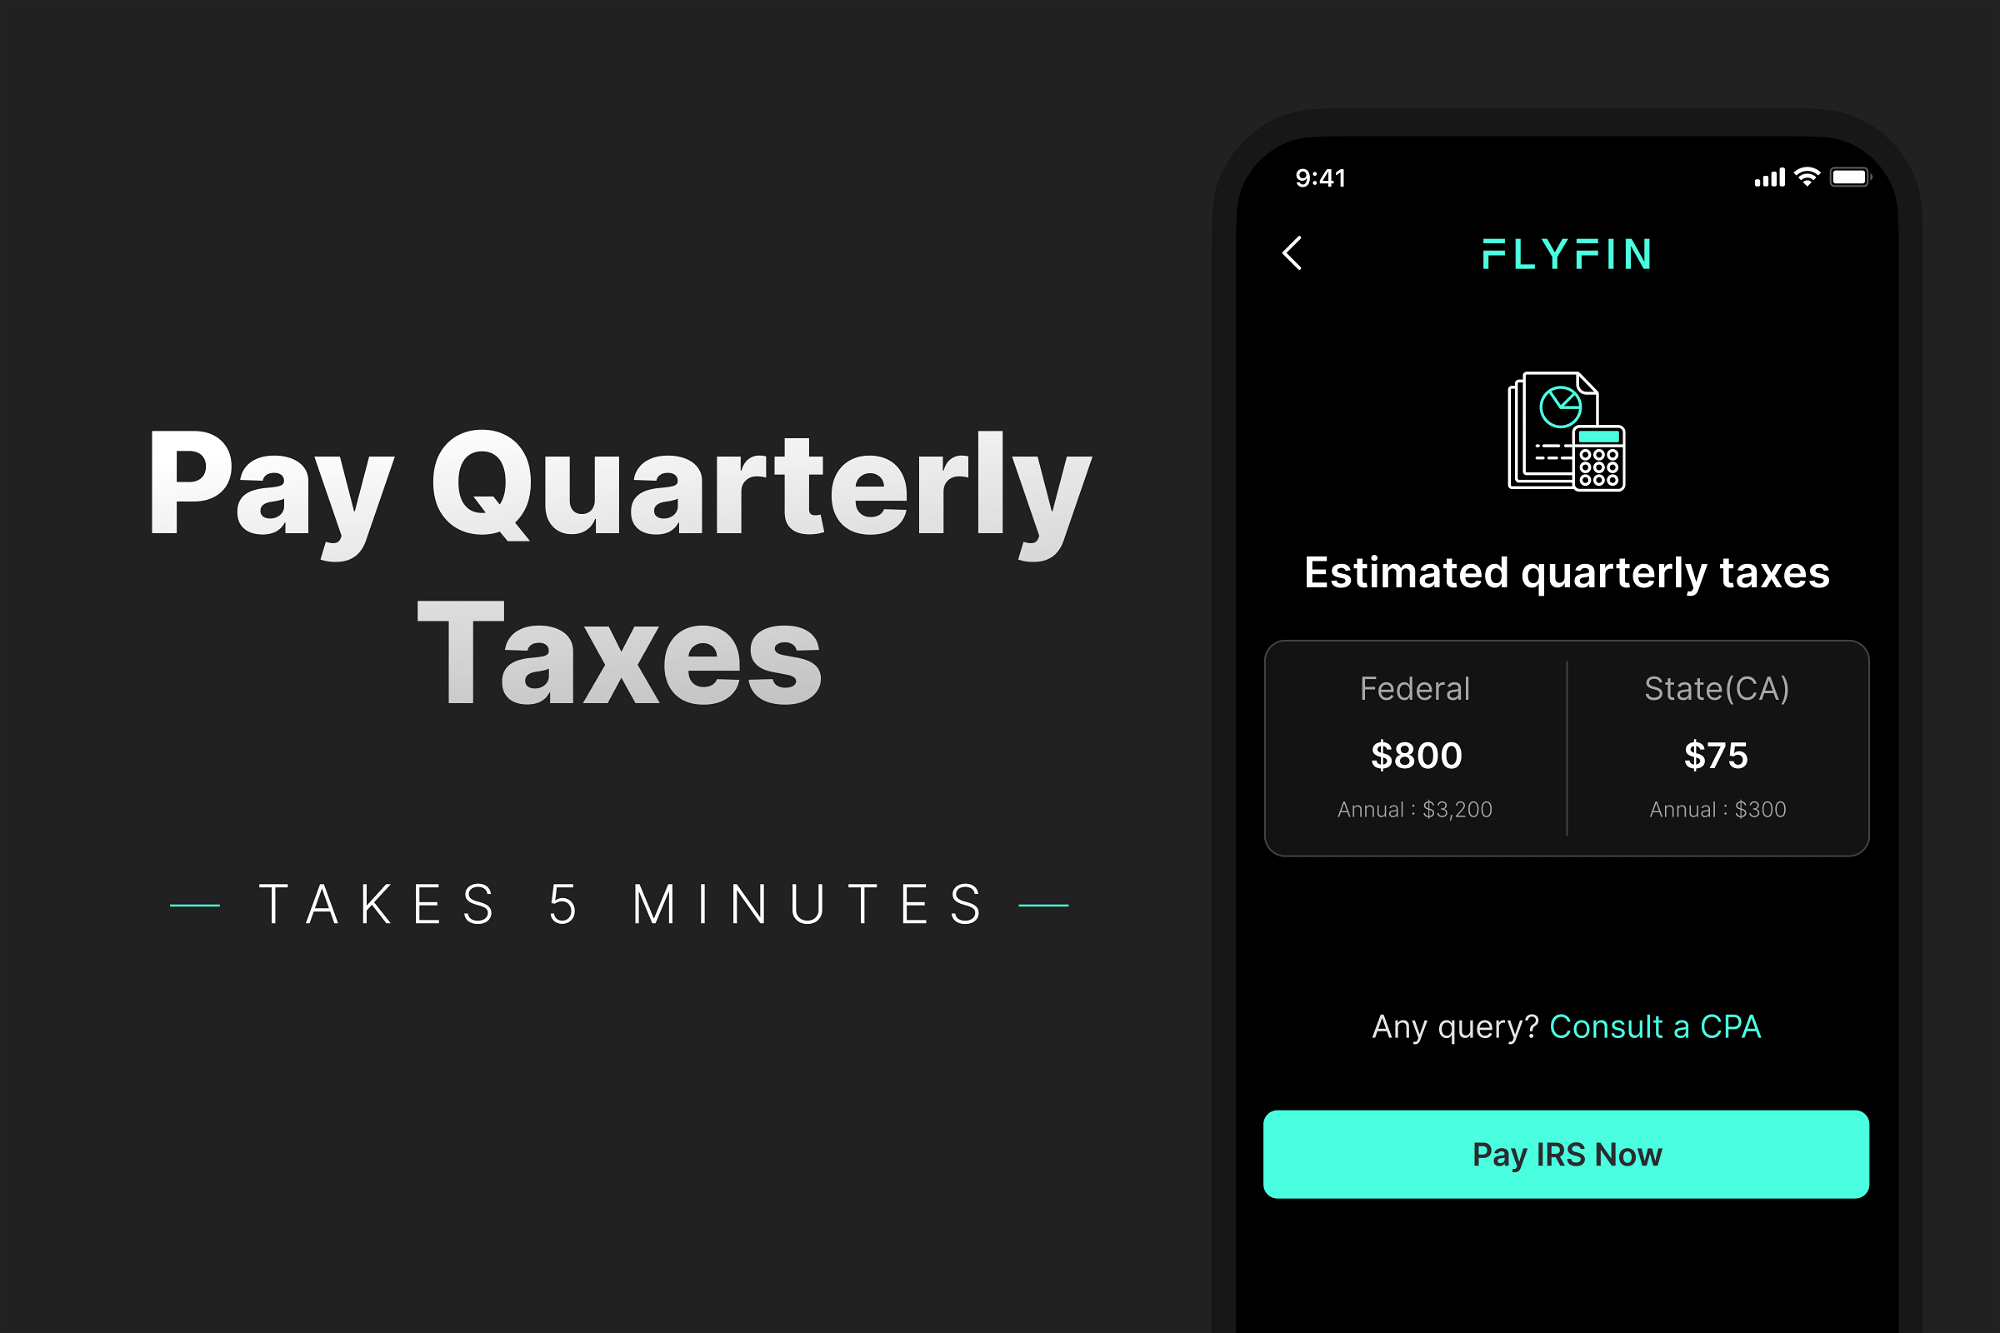 Pay quarterly taxes